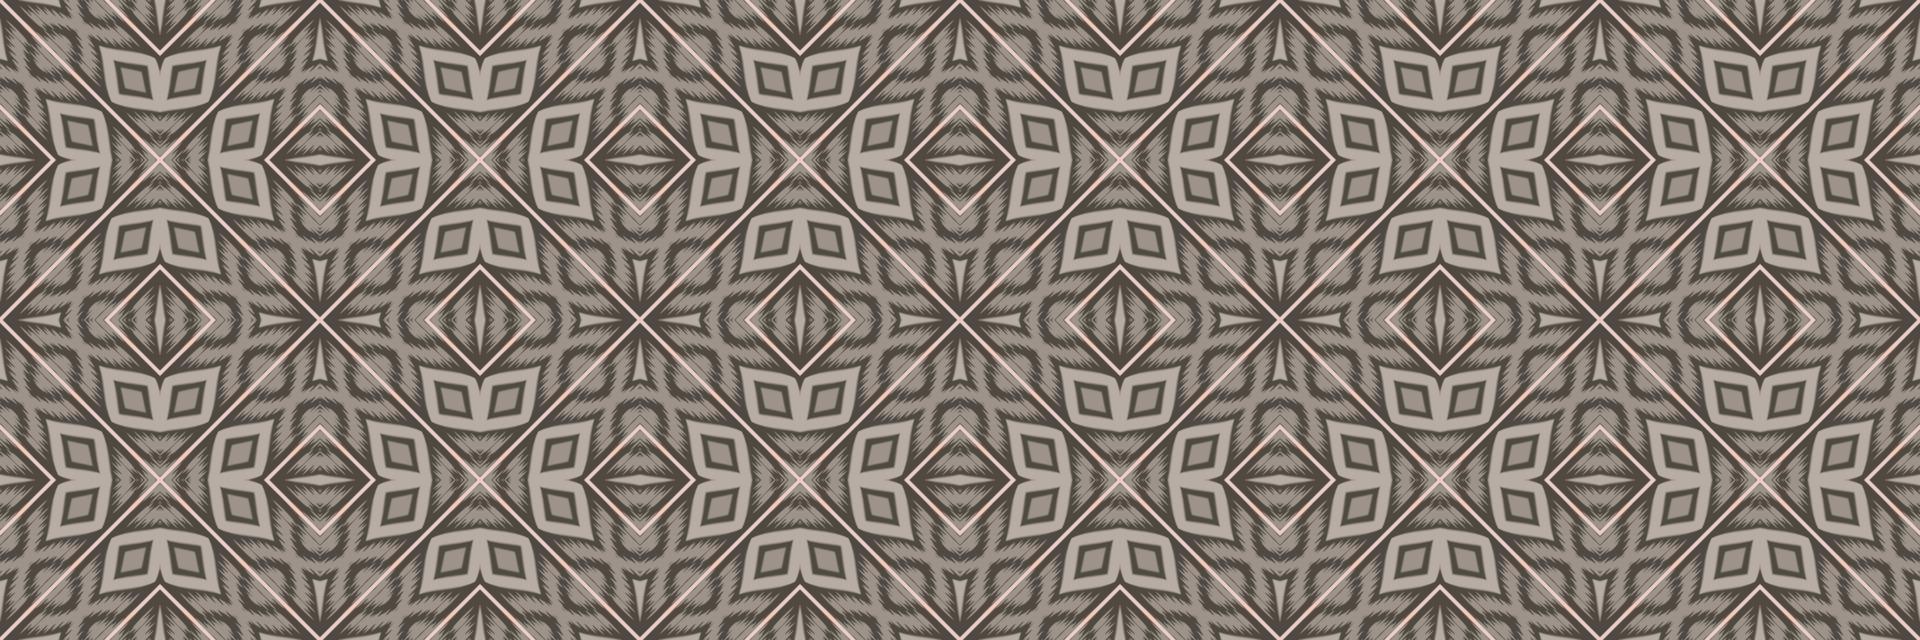 textil batik ikkat o ikat damasco patrón sin costuras diseño vectorial digital para imprimir saree kurti borneo borde de tela símbolos de pincel diseñador de muestras vector